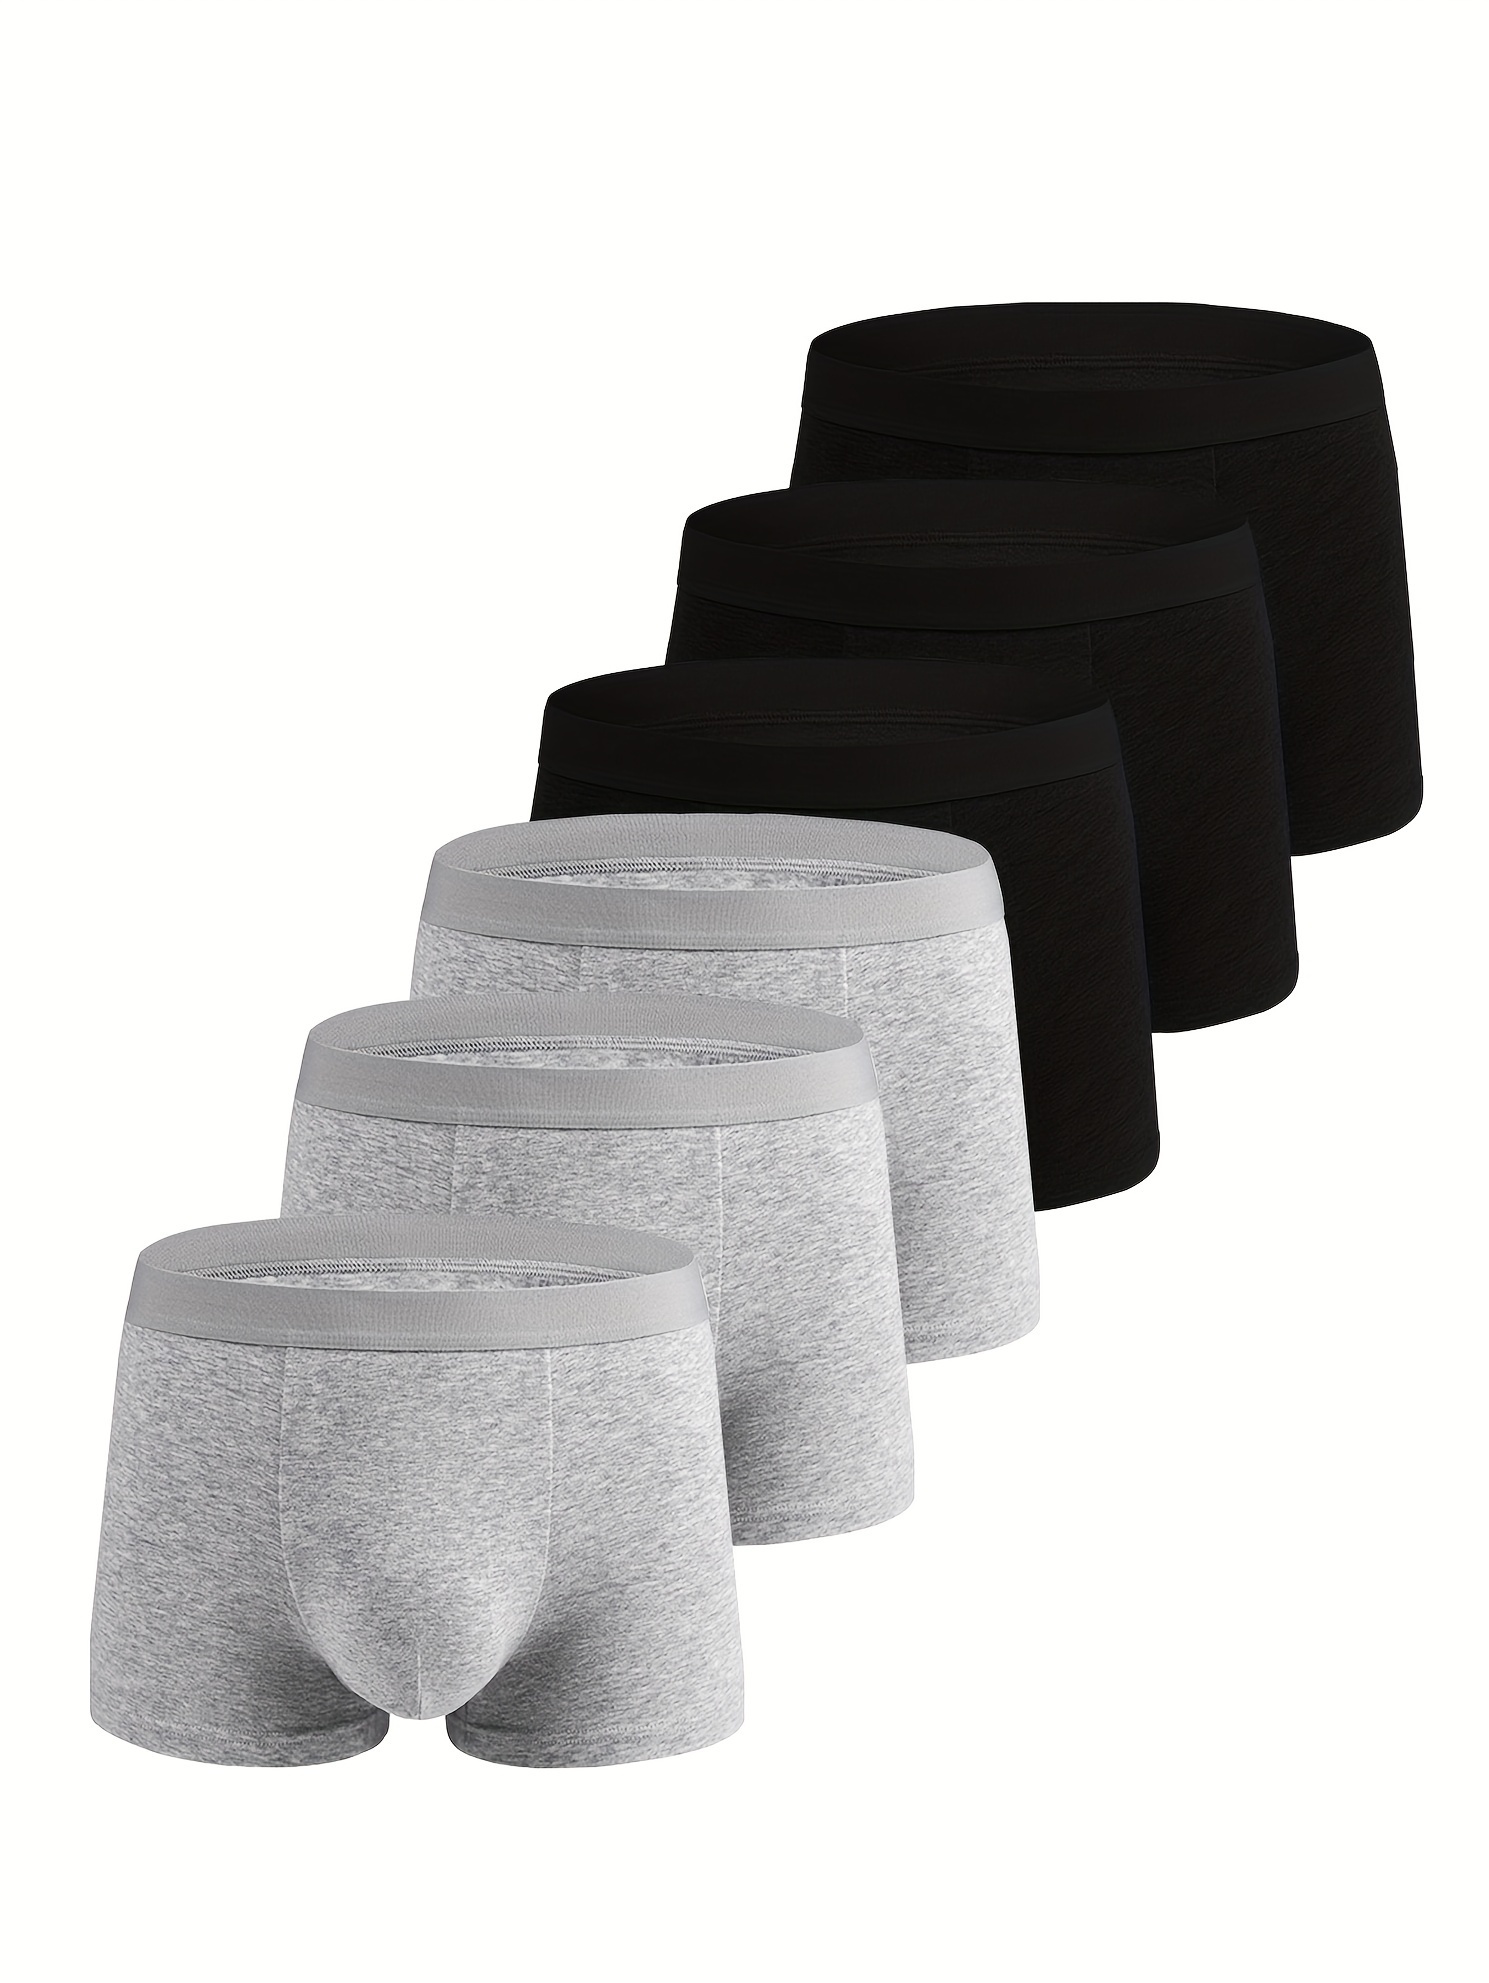 Black Boxer Brief underpants 3-Pack - Bread & Boxers